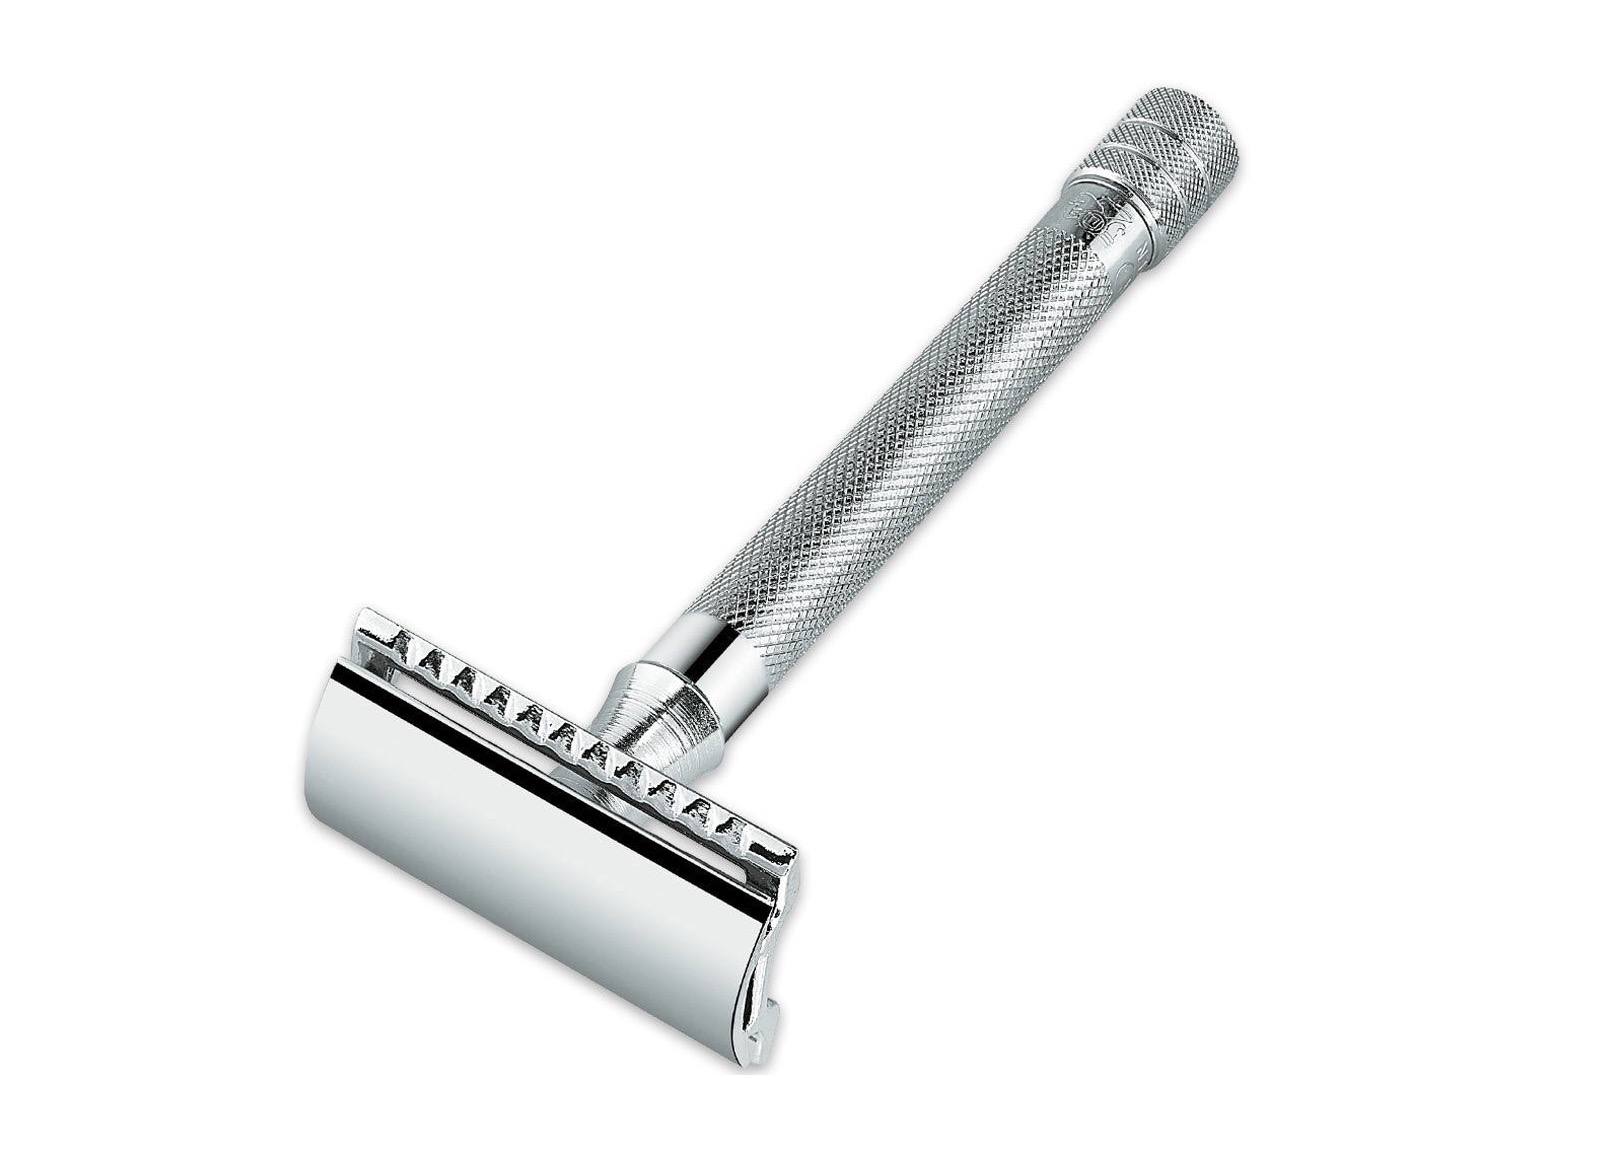 Merkur's long-handled safety razor. ($21)